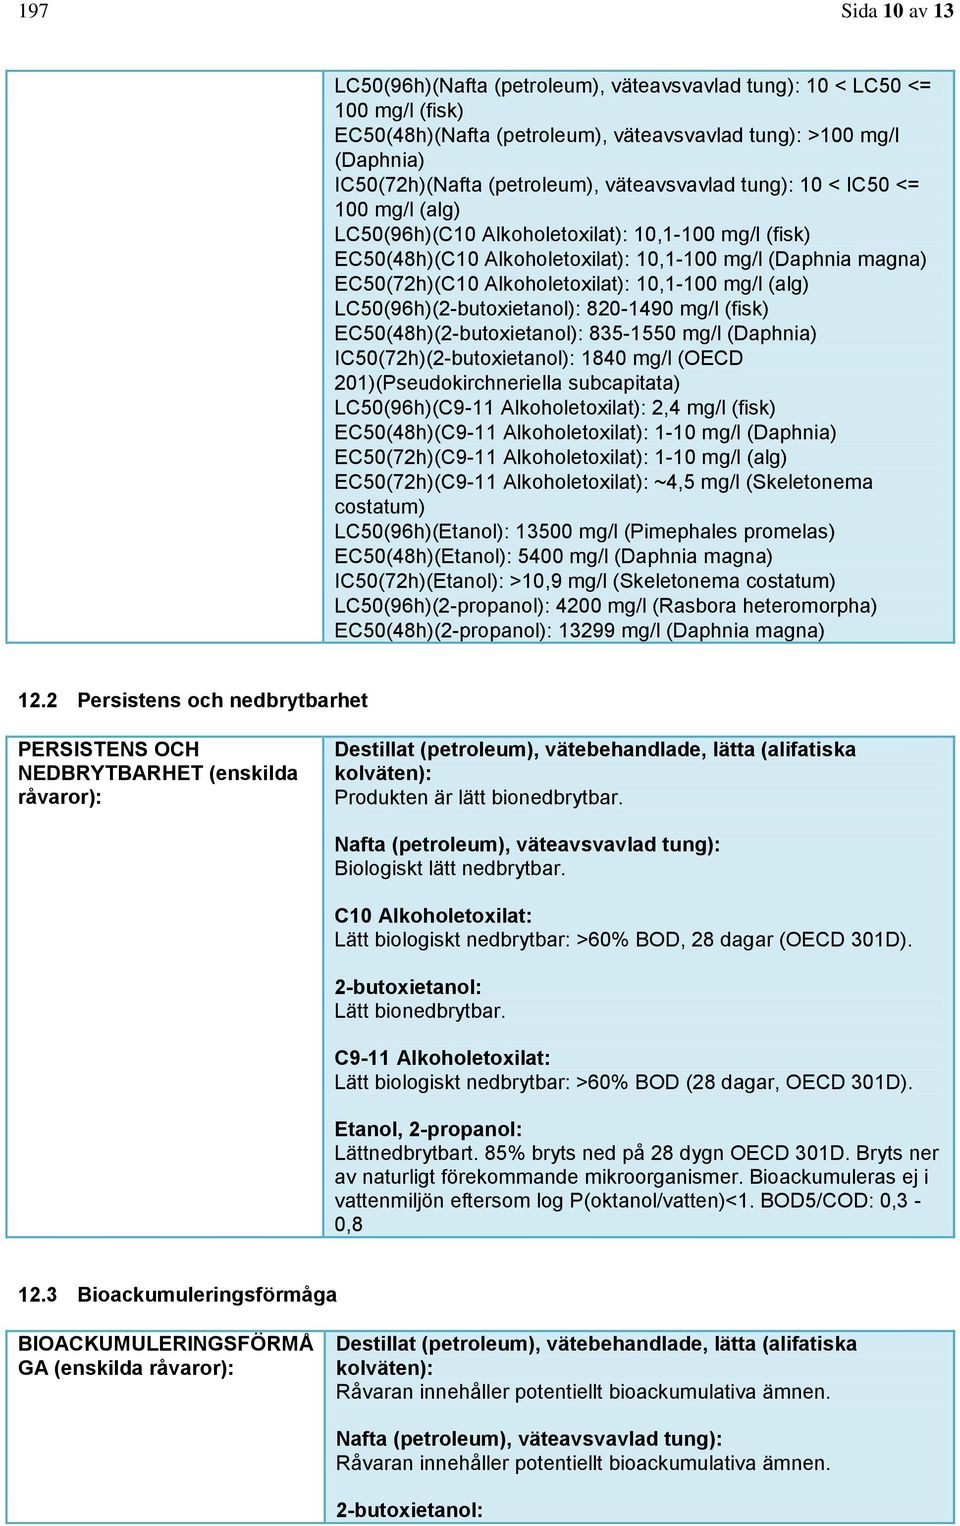 10,1-100 mg/l (alg) LC50(96h)(2-butoxietanol): 820-1490 mg/l (fisk) EC50(48h)(2-butoxietanol): 835-1550 mg/l (Daphnia) IC50(72h)(2-butoxietanol): 1840 mg/l (OECD 201)(Pseudokirchneriella subcapitata)